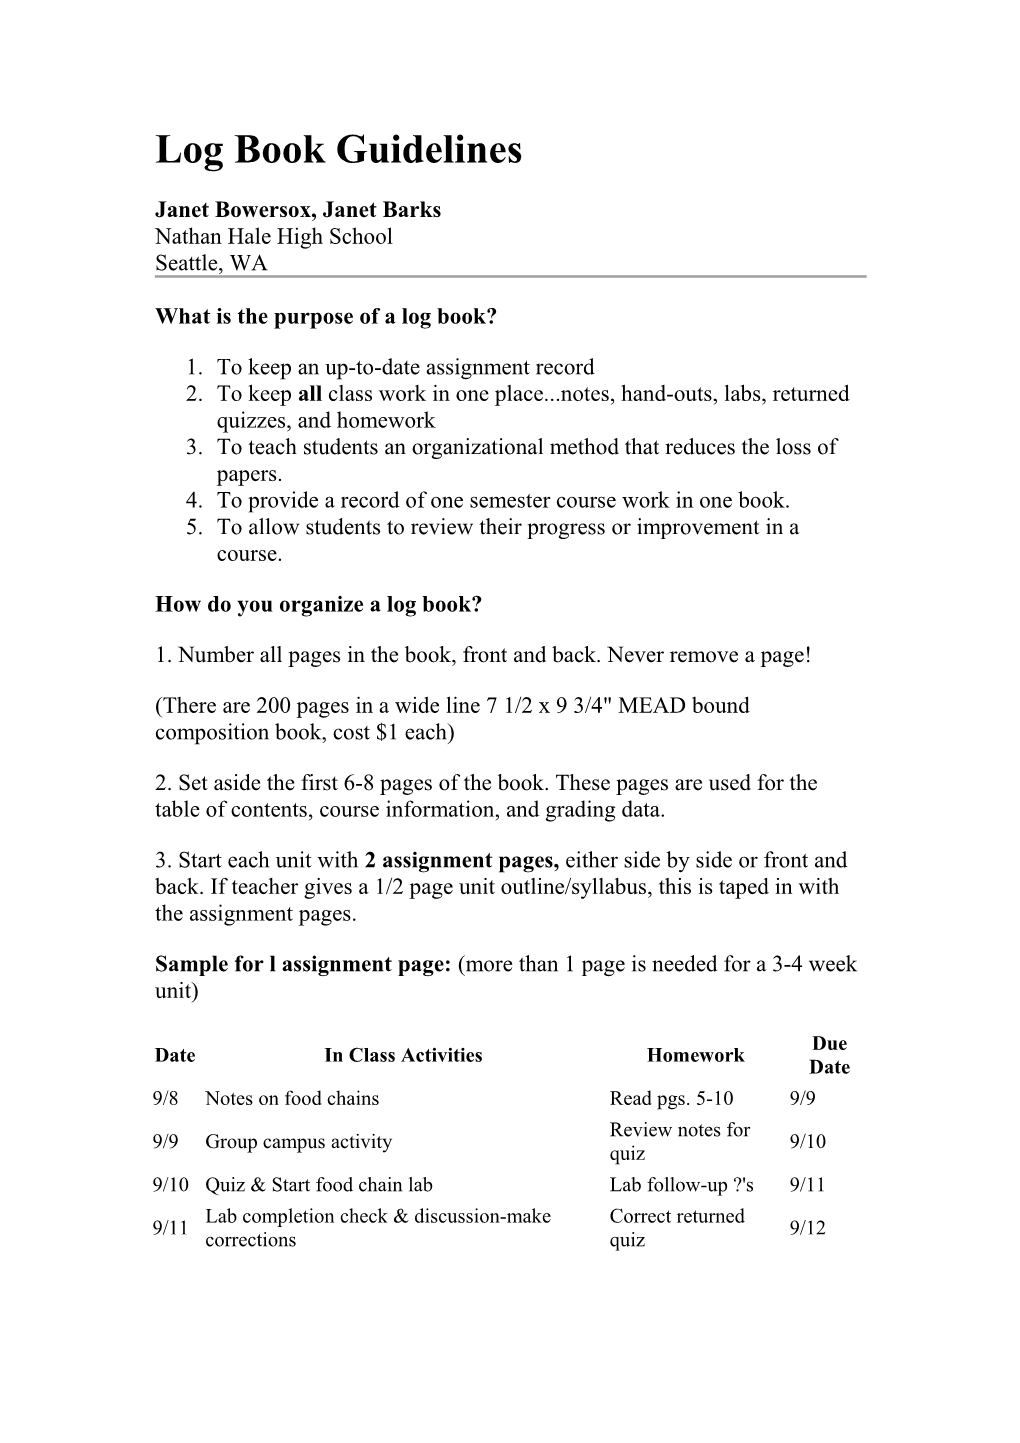 Log Book Guidelines